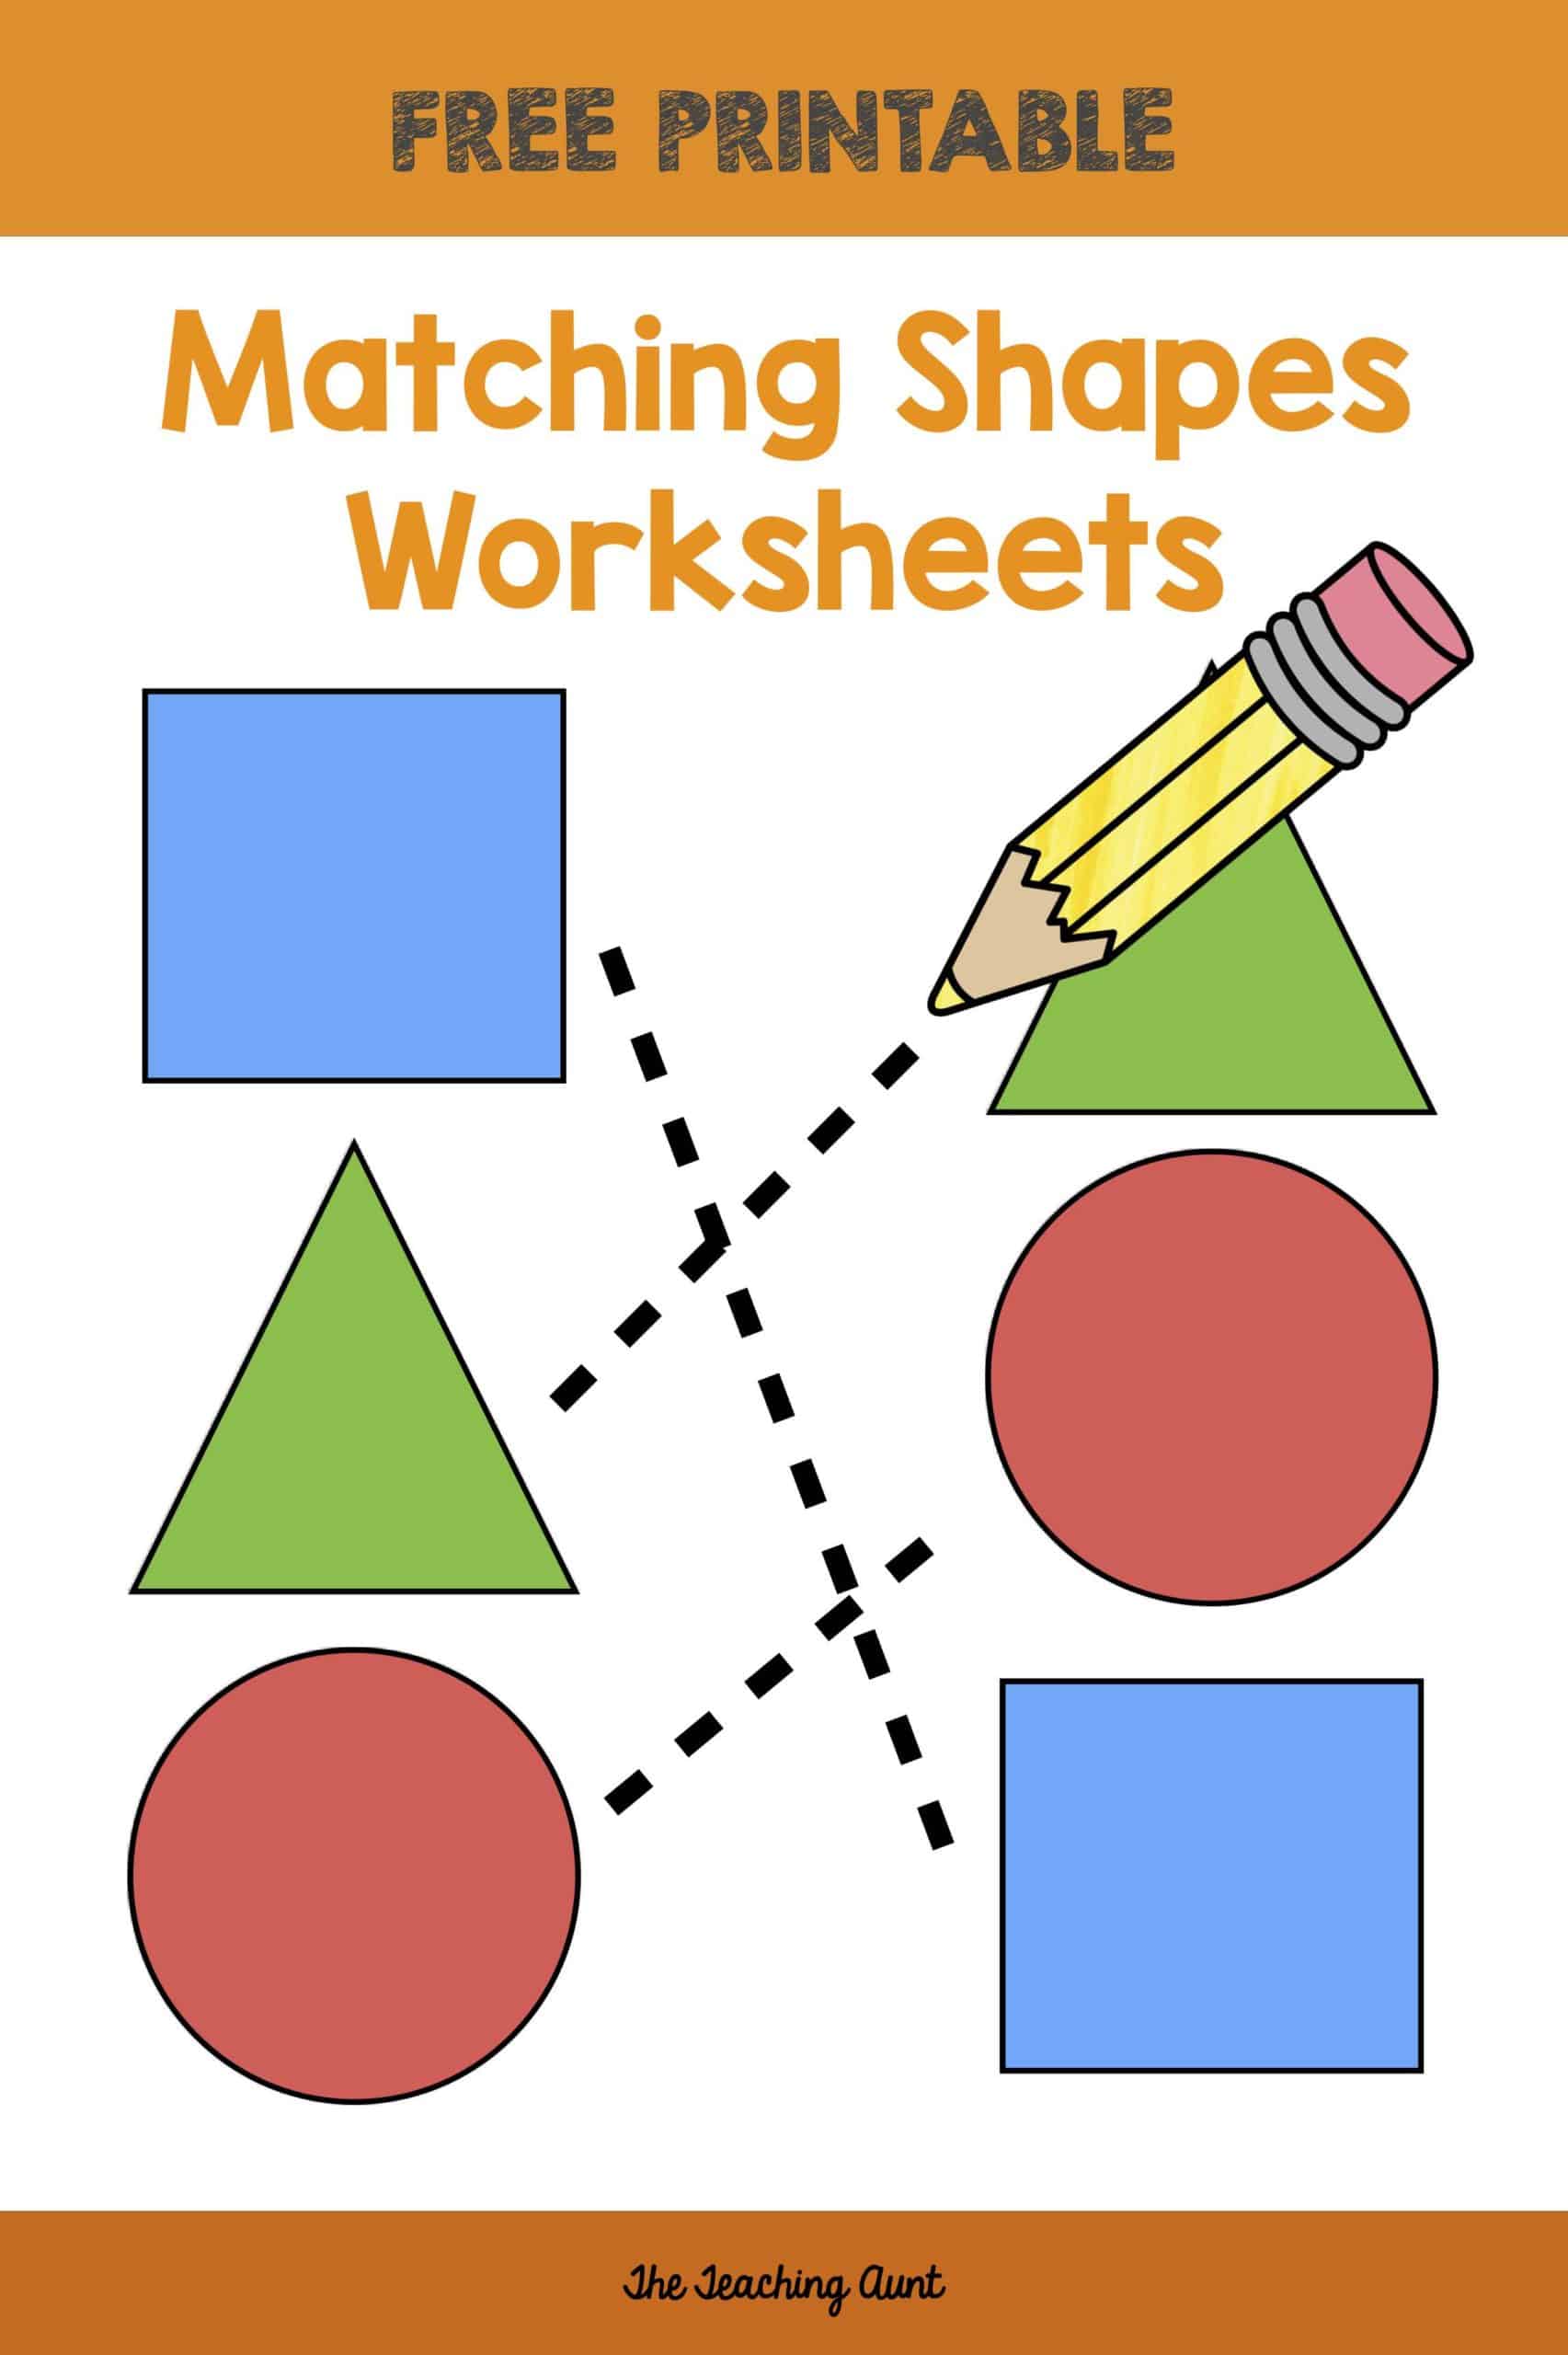 Free Matching Shapes Worksheets